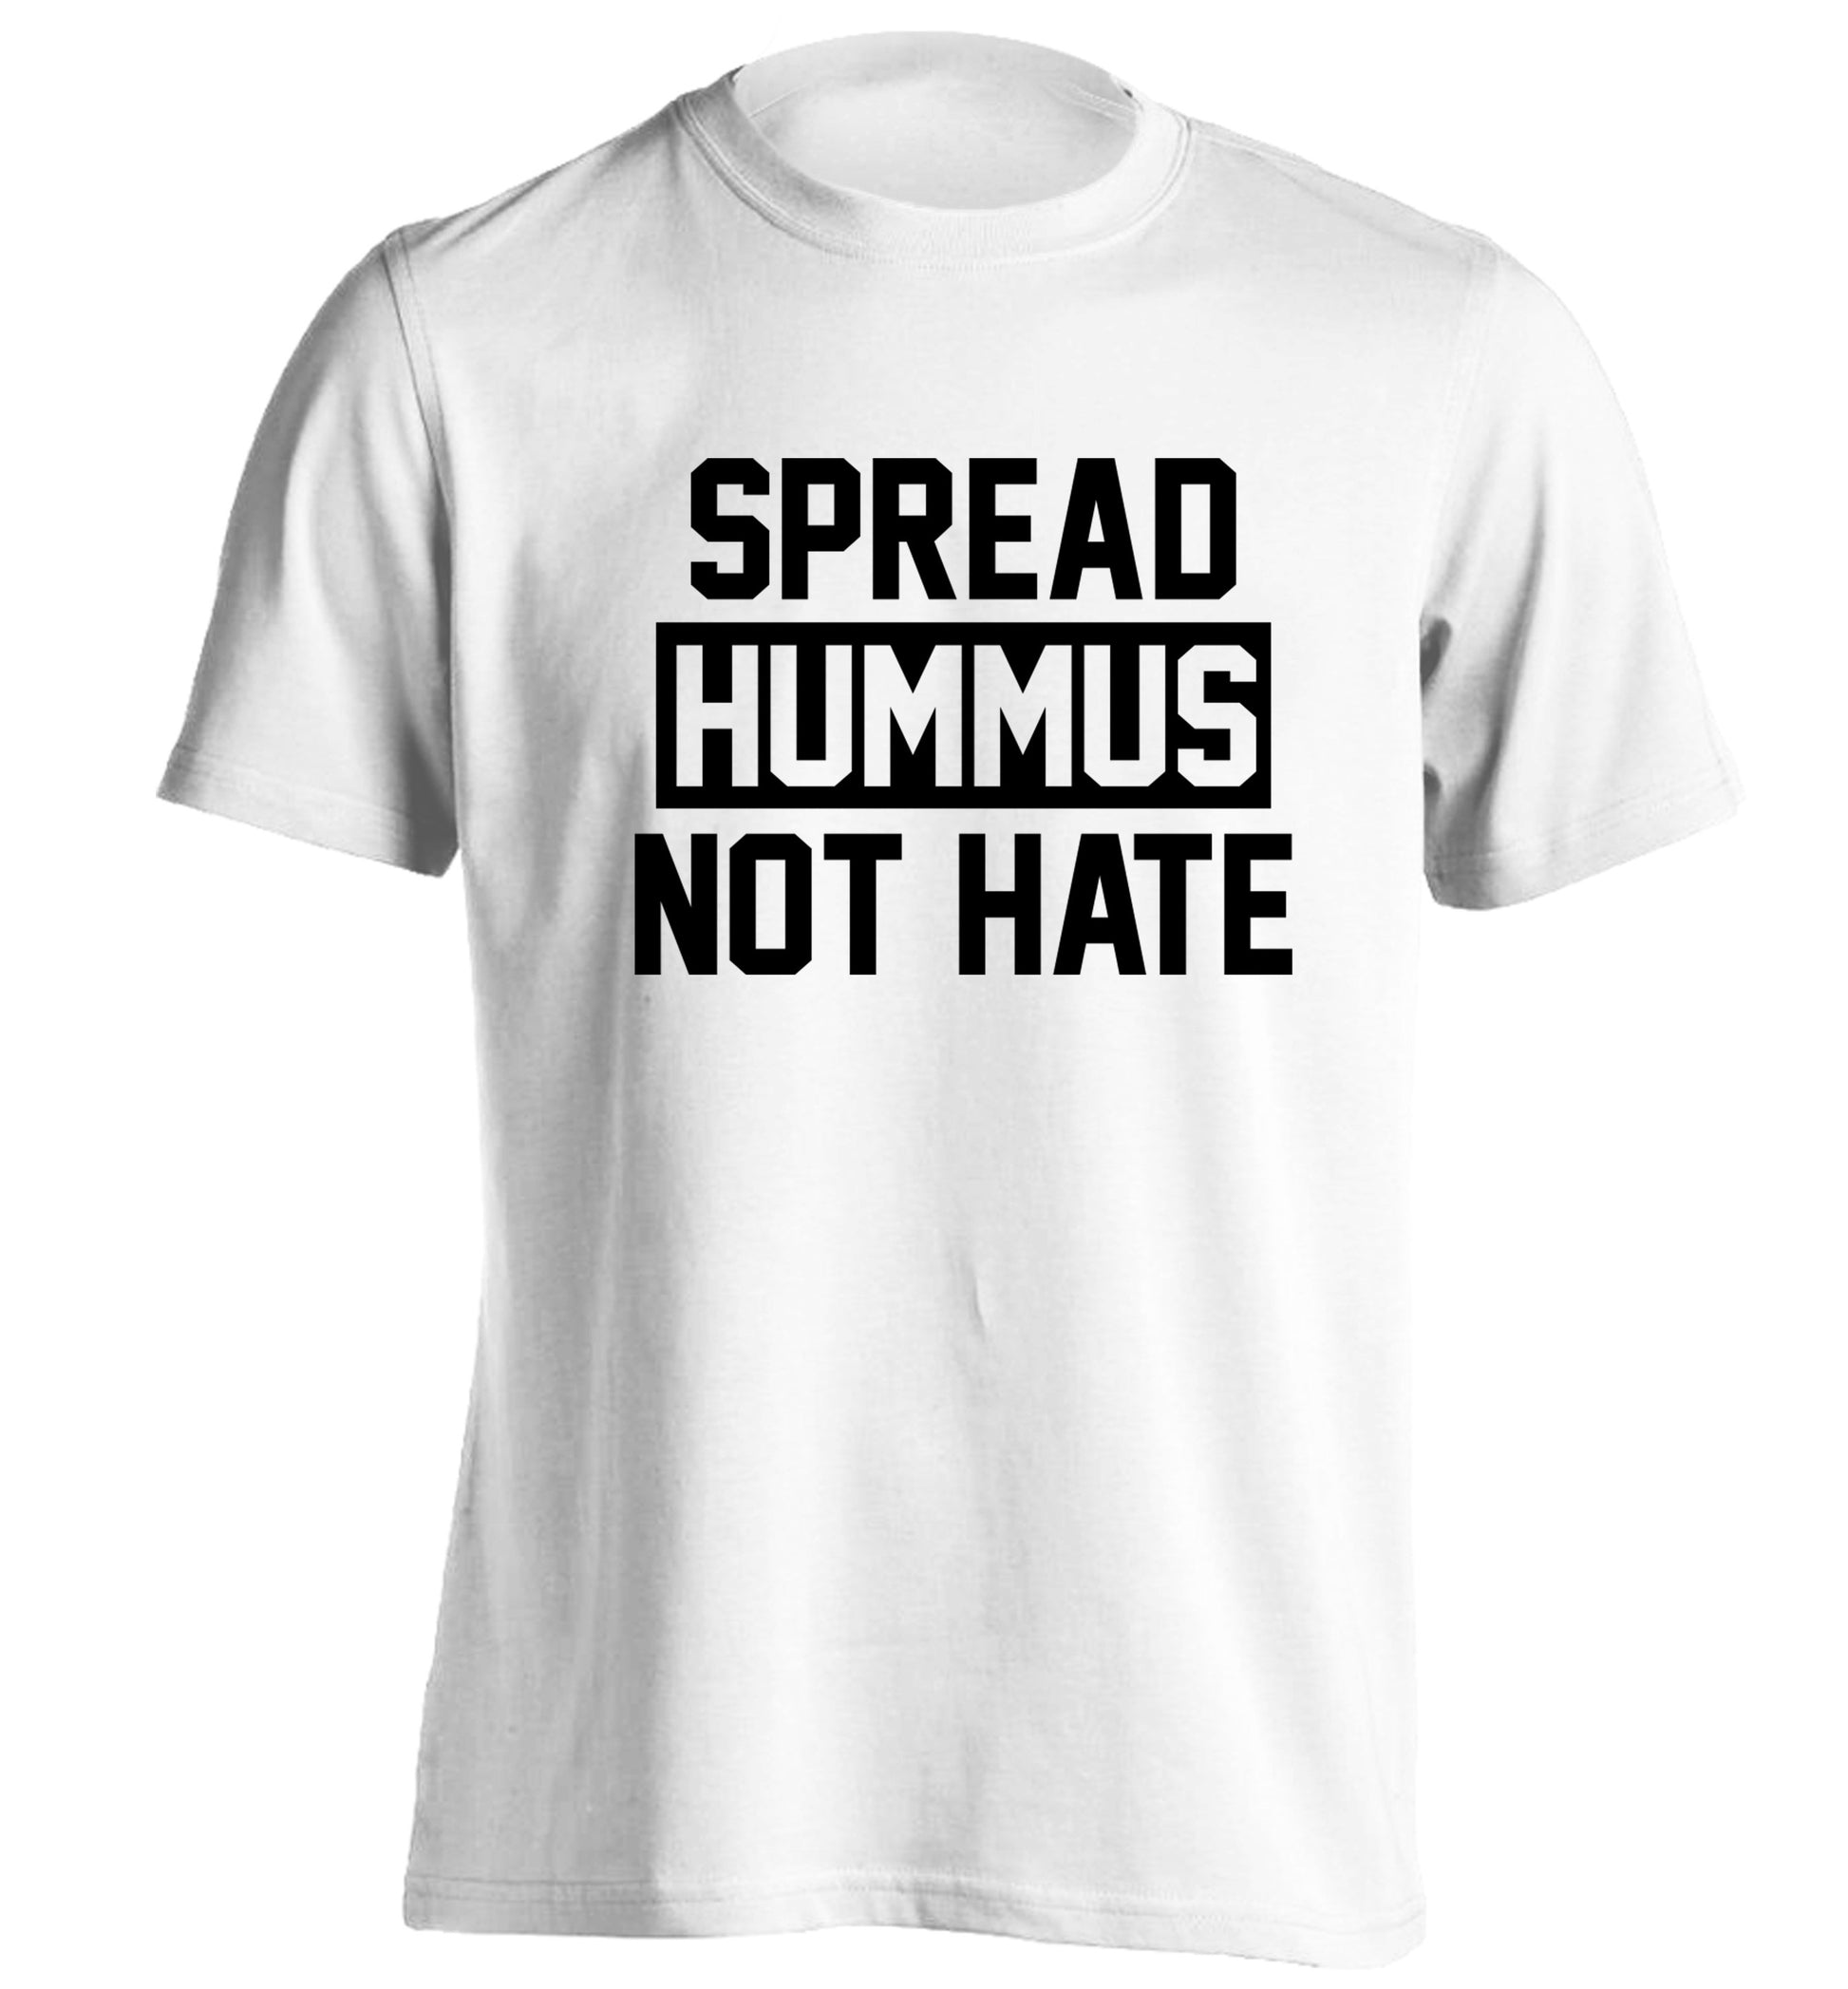 Spread hummus not hate adults unisex white Tshirt 2XL